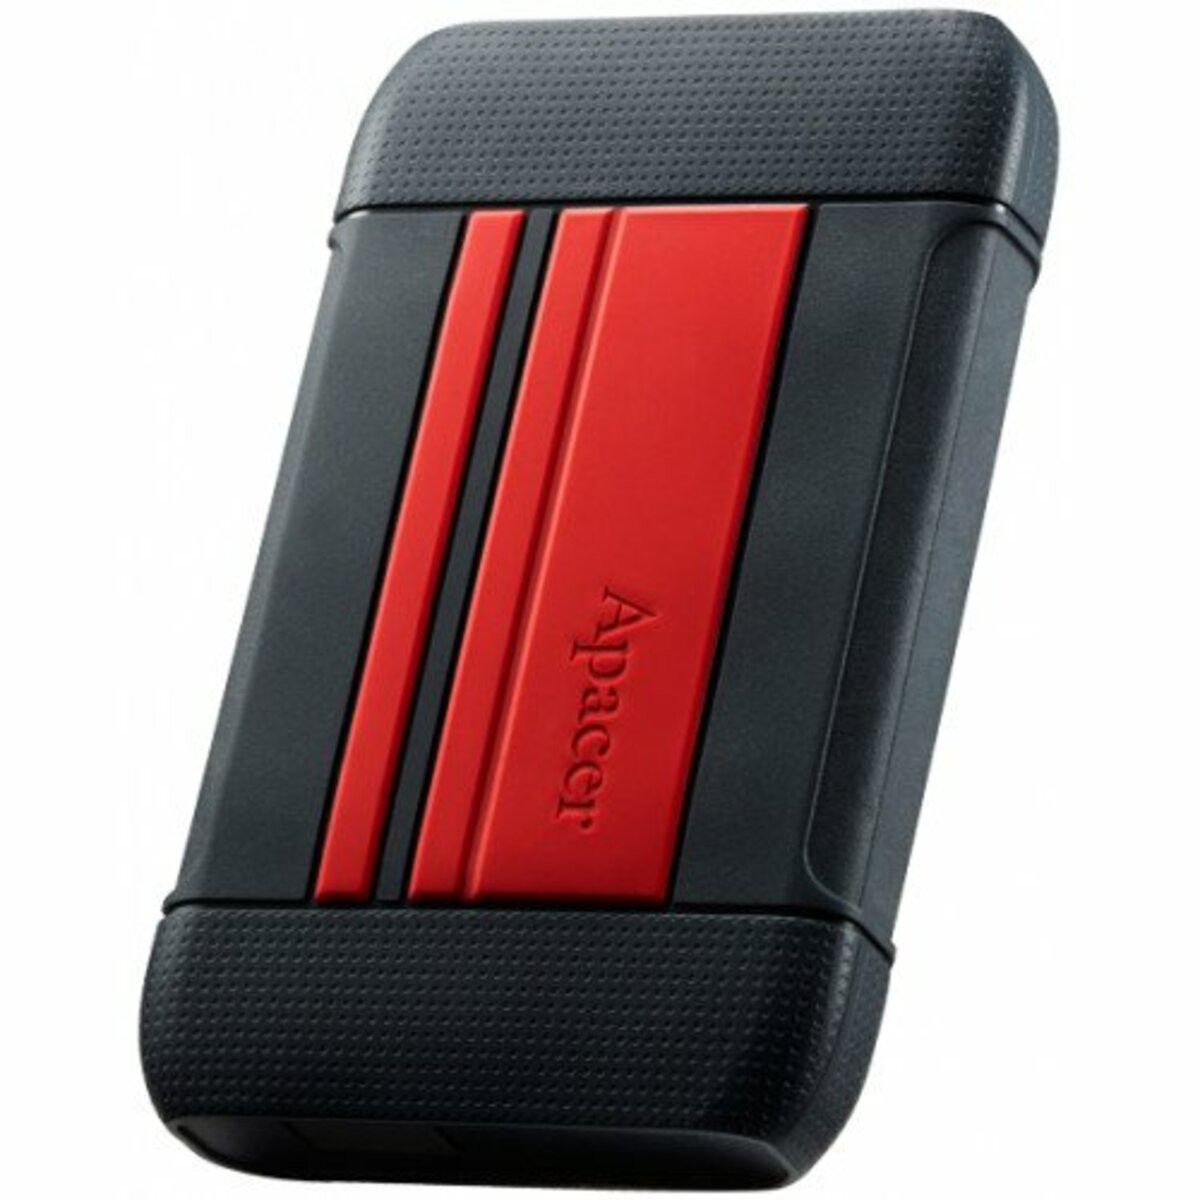 PHD External 2.5'' Apacer USB 3.1 AC633 2TB Red (color box) - 1